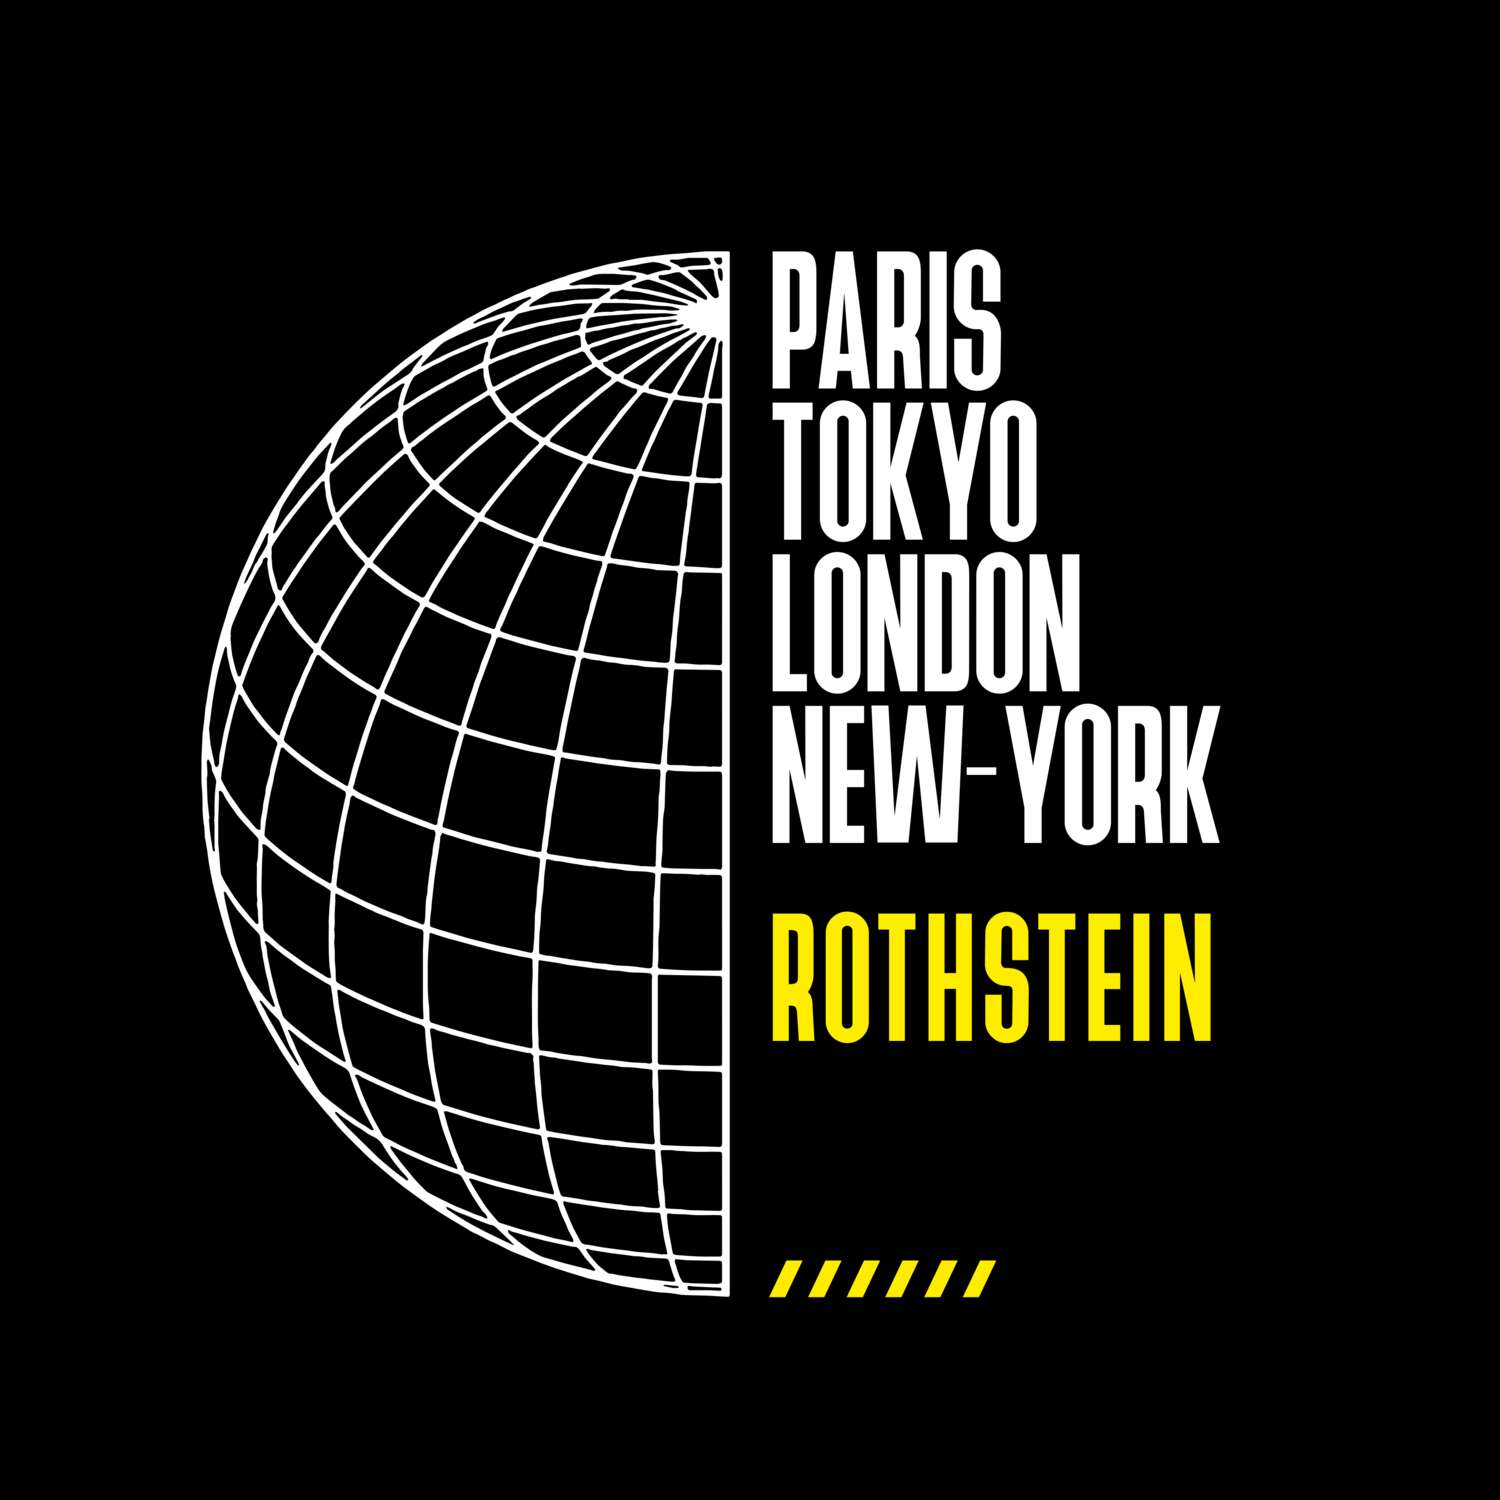 Rothstein T-Shirt »Paris Tokyo London«